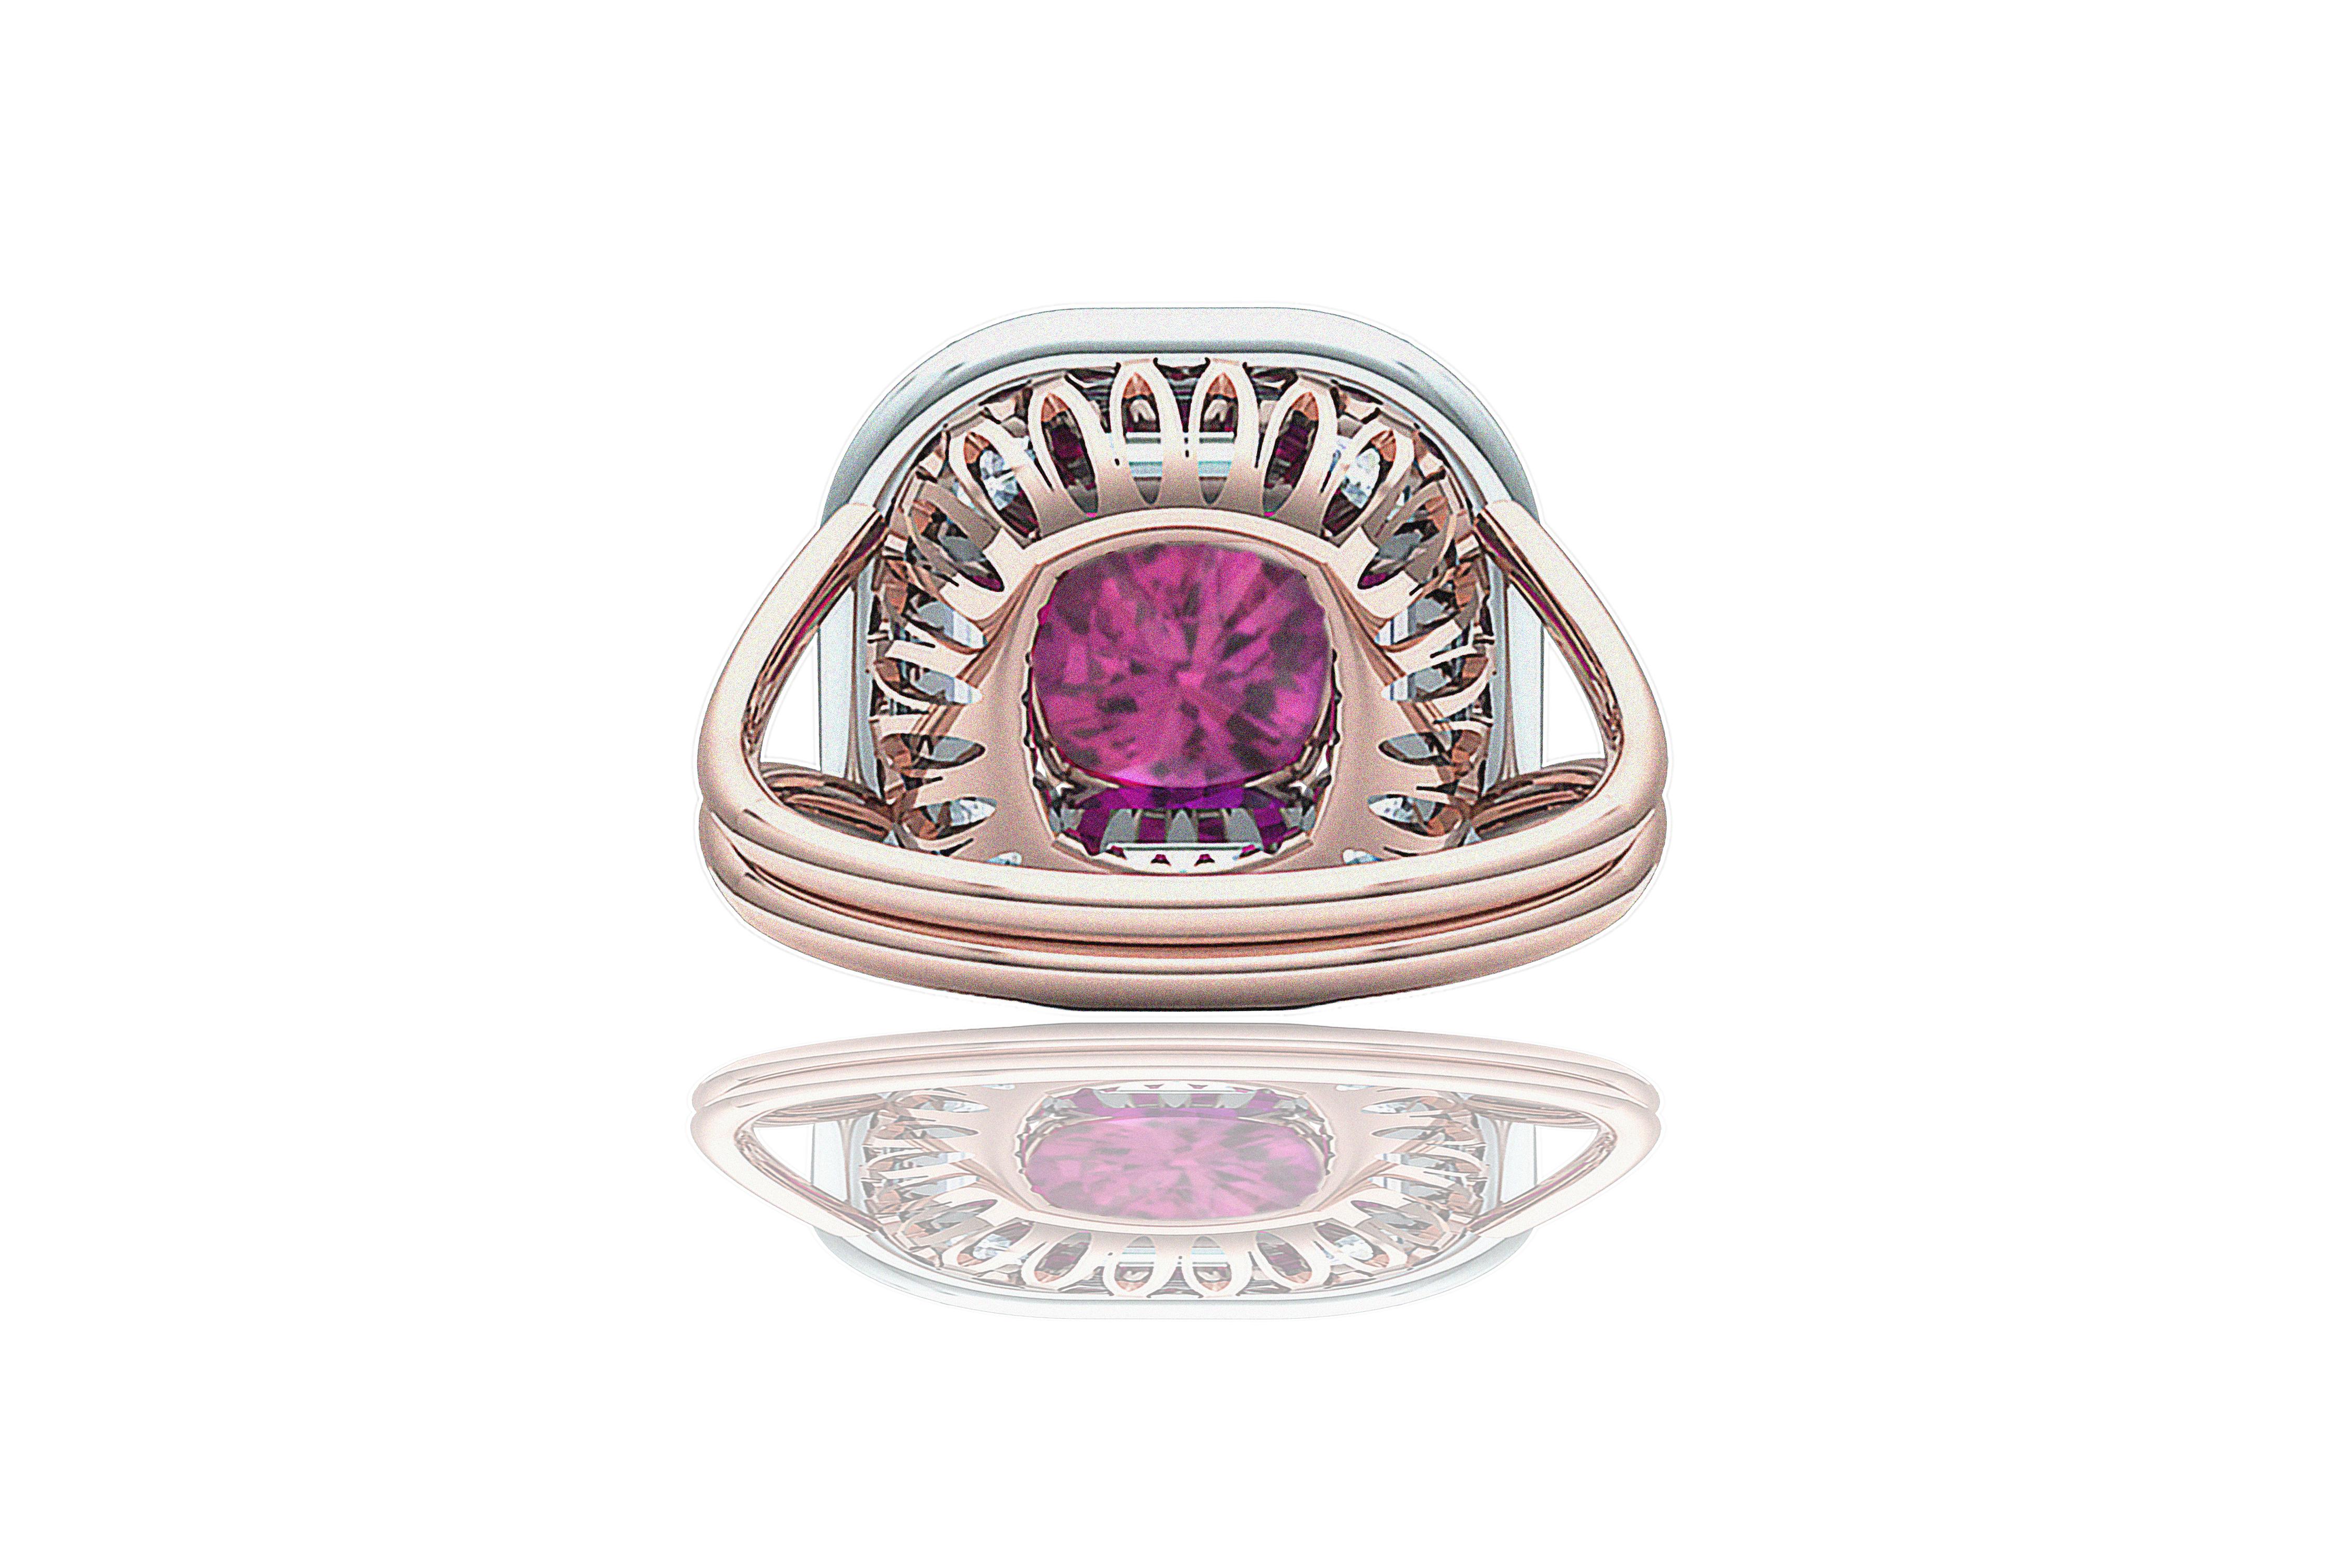 2 Carat Purplish Pink Cushion Cut Sapphire Diamond Cocktail Ring For Sale 1